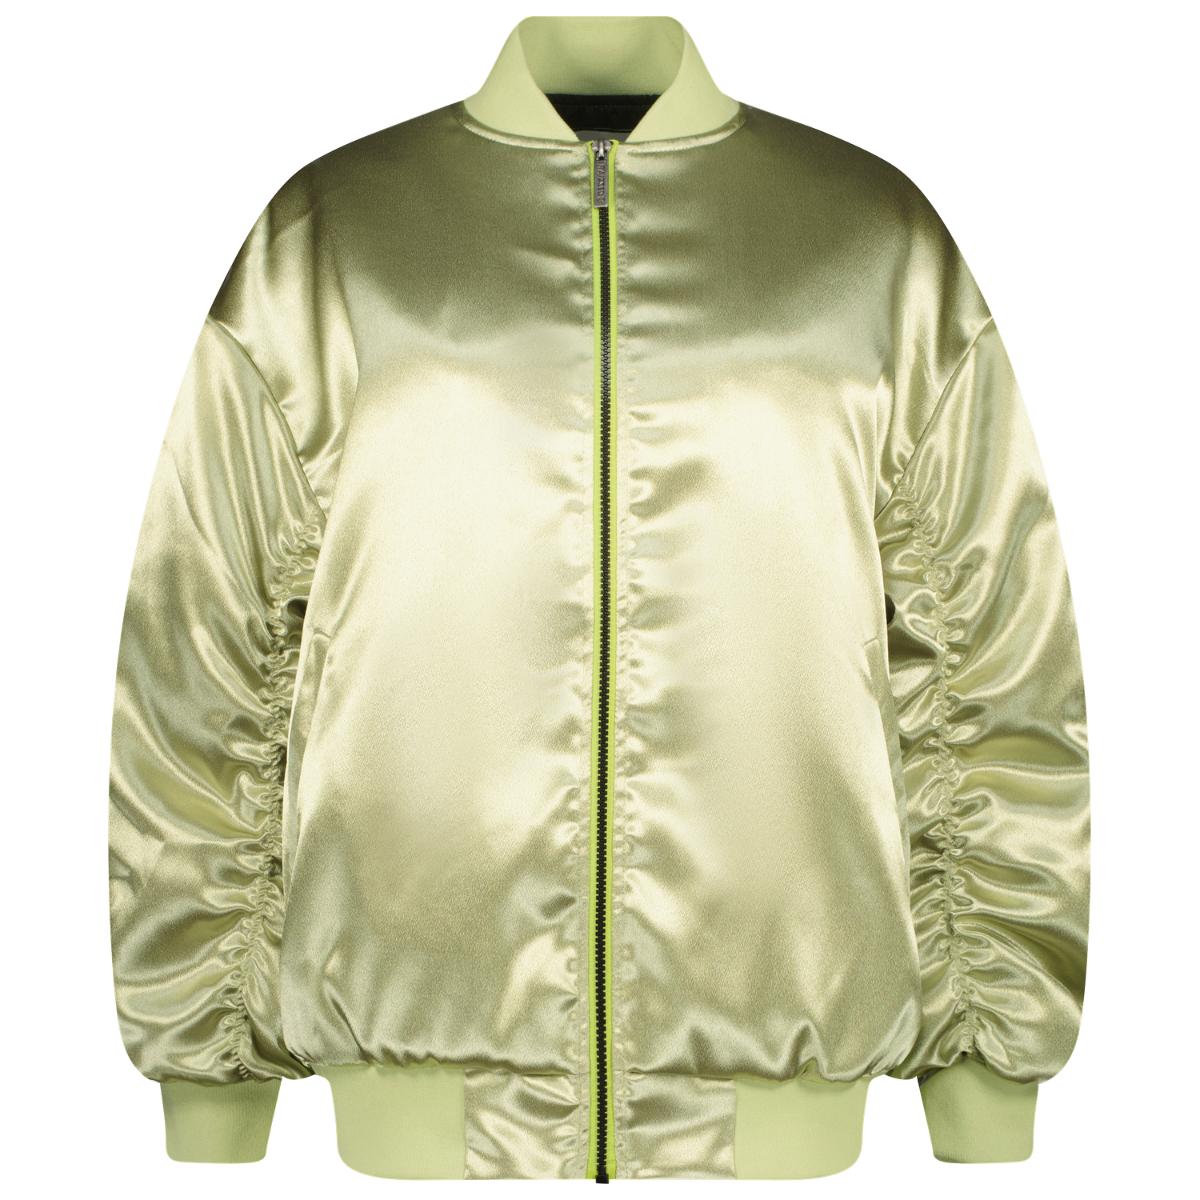 Bomber jacket Misha mint green